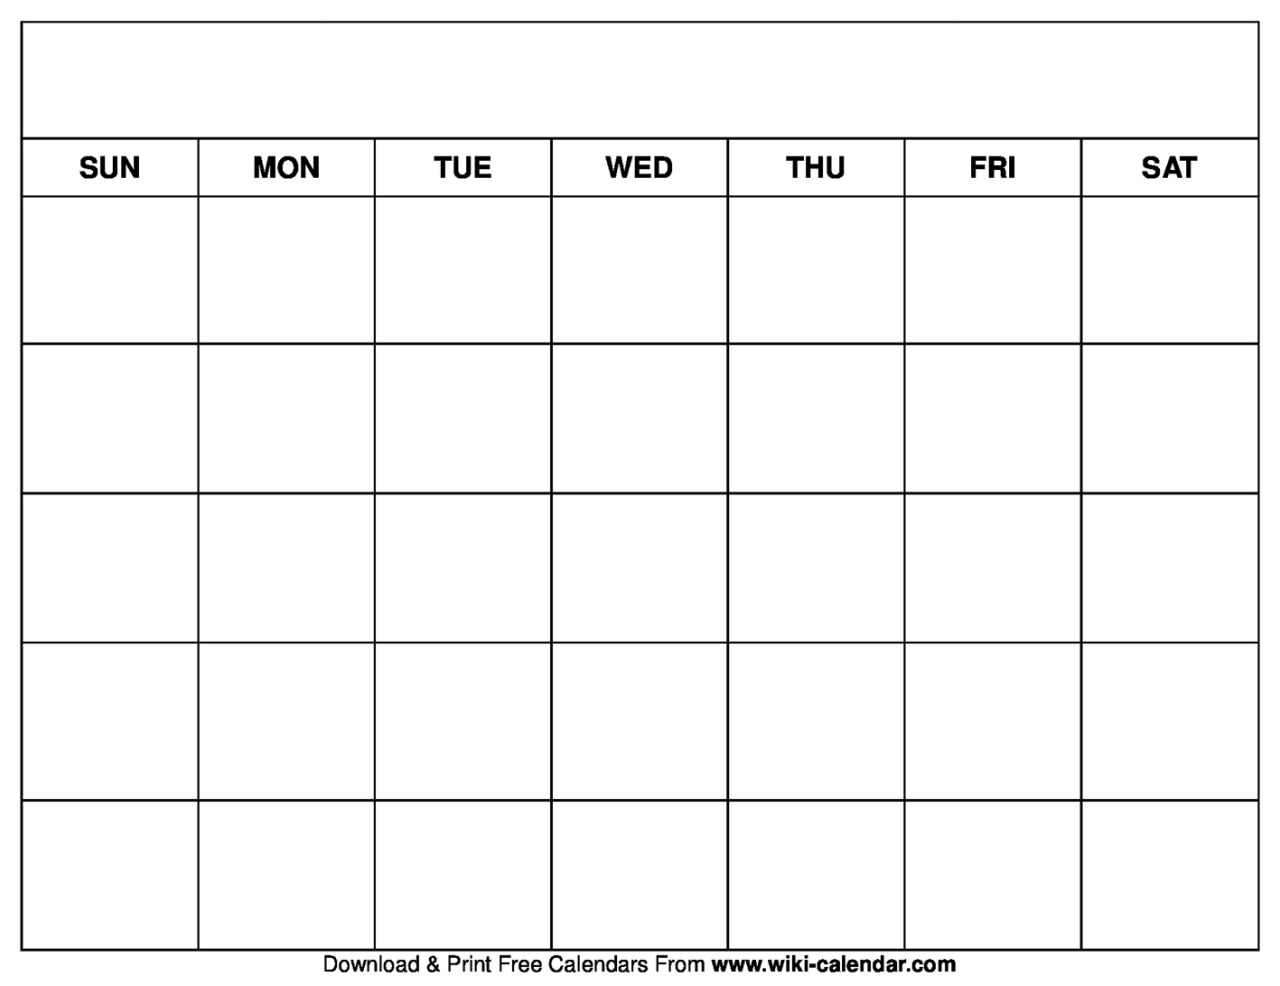 Wiki Calendar — Free Printable March 2020 Calendars